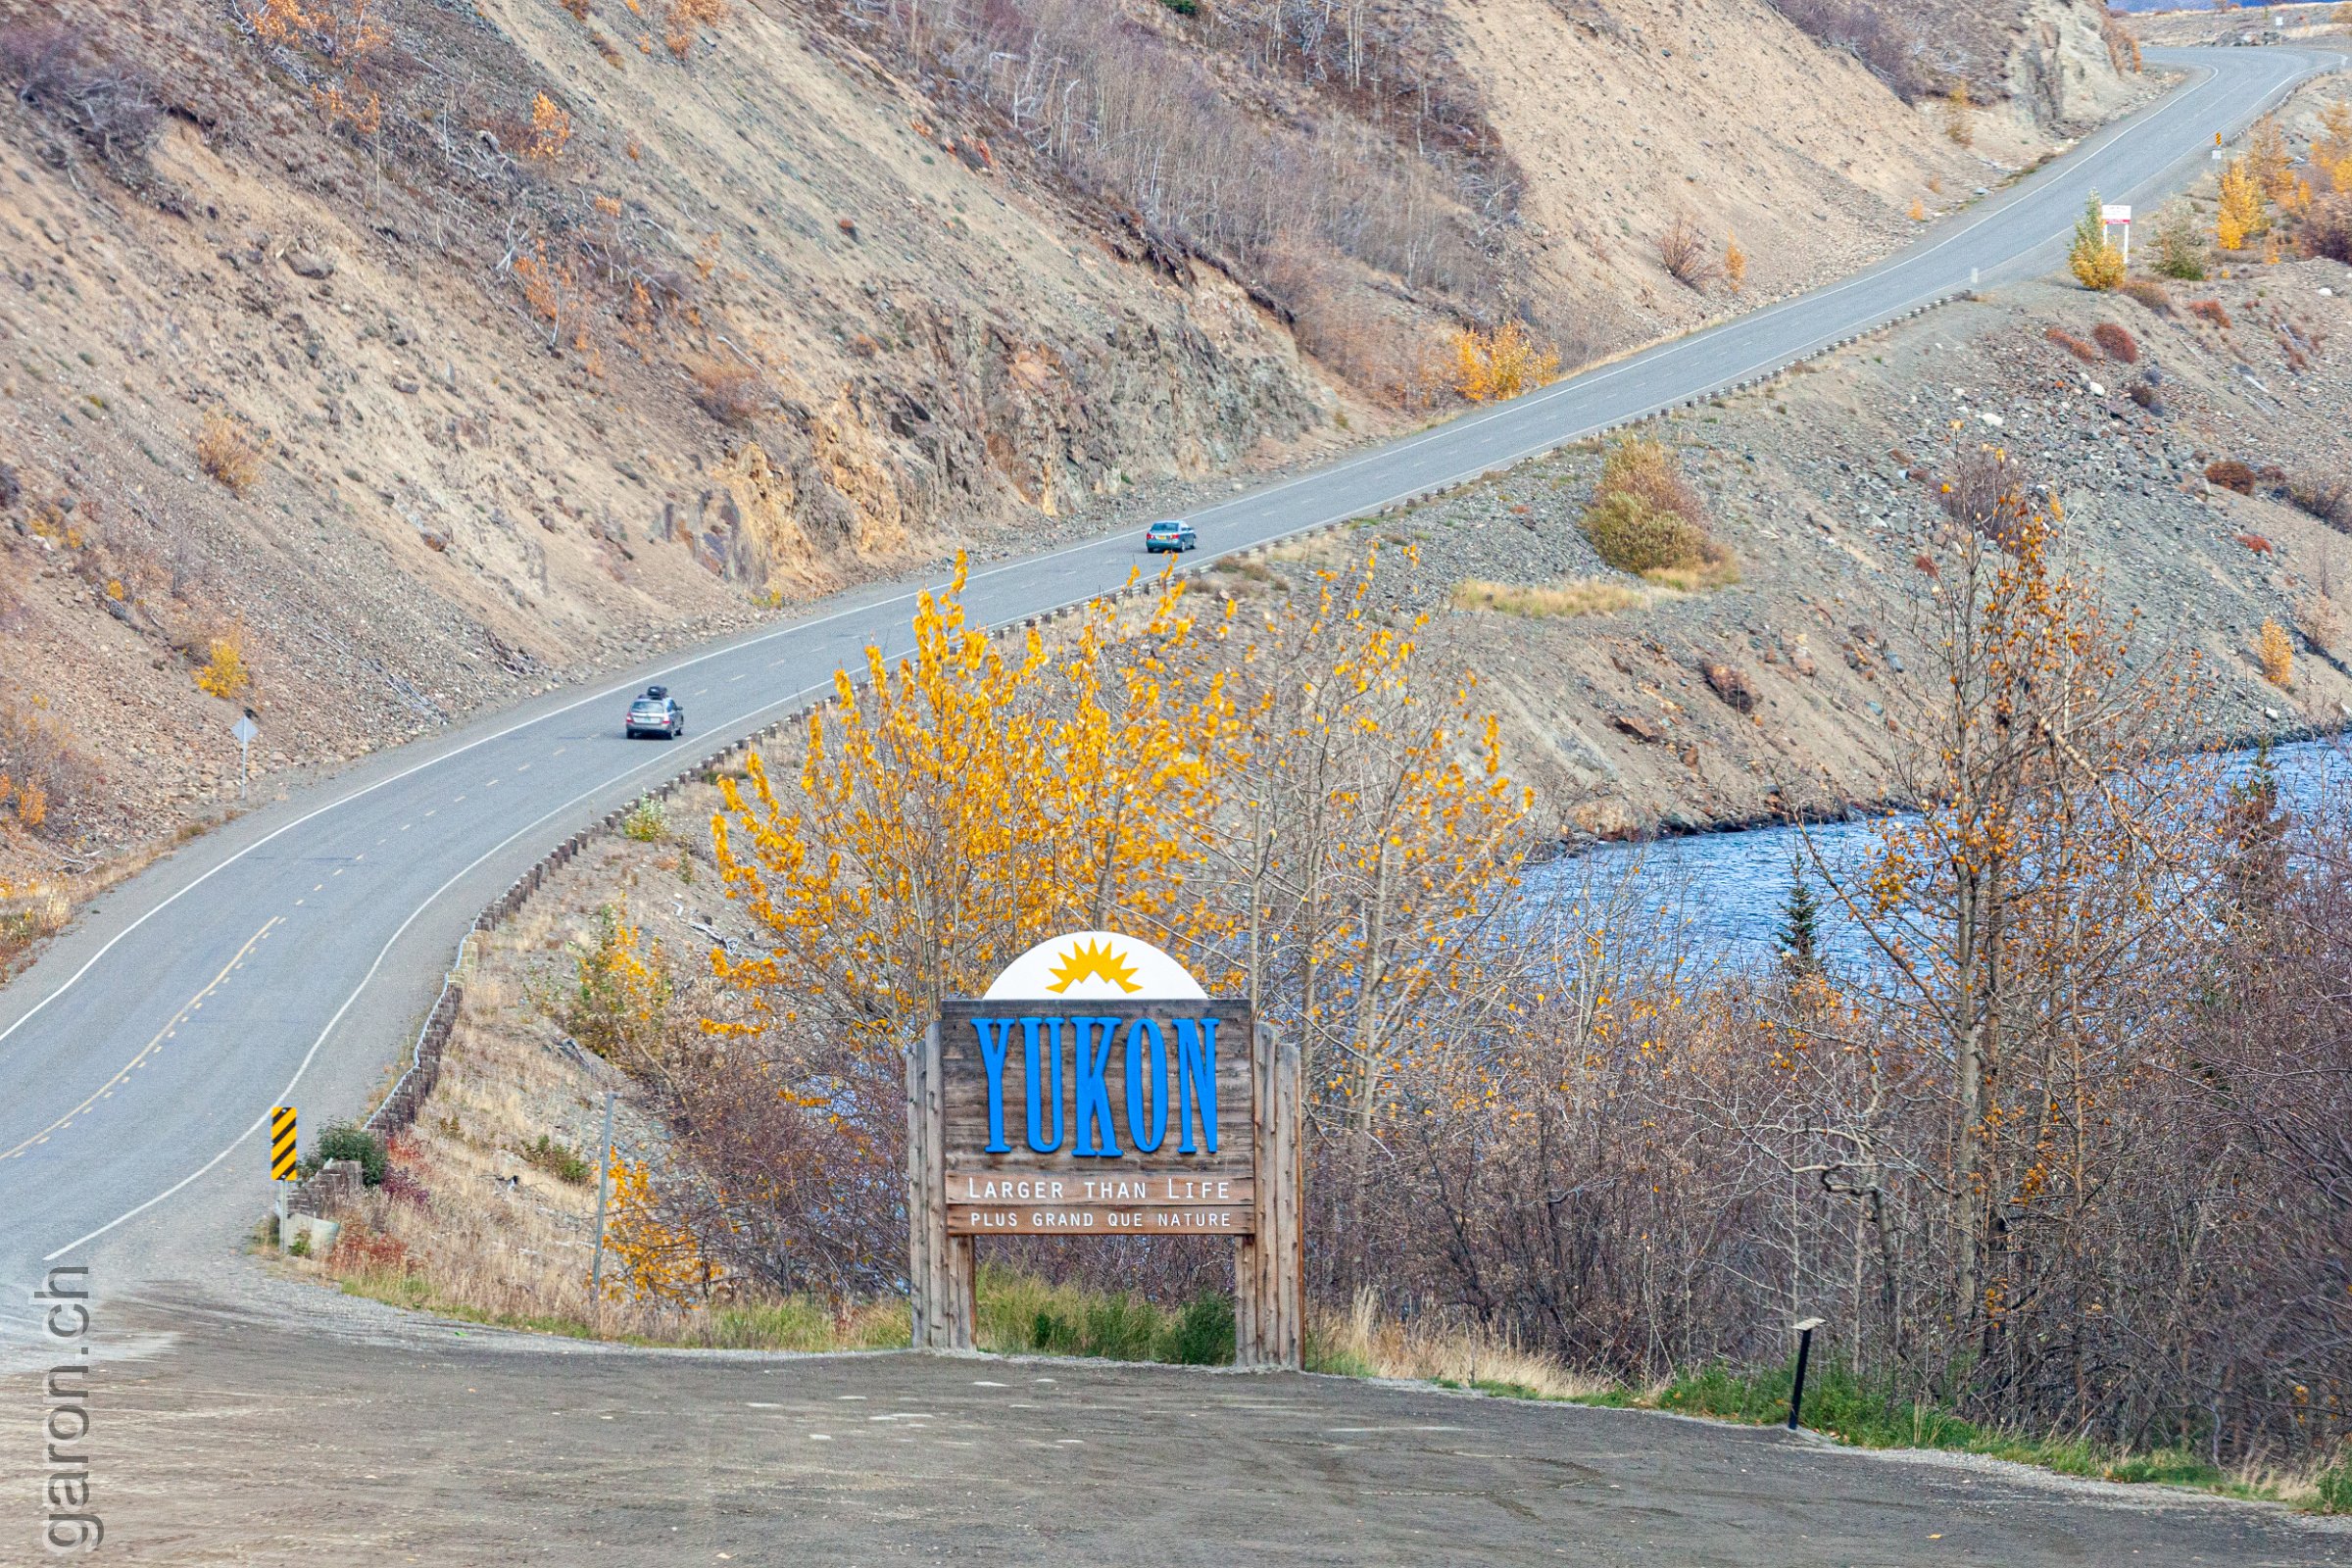 Yukon, along Klondike Highway 